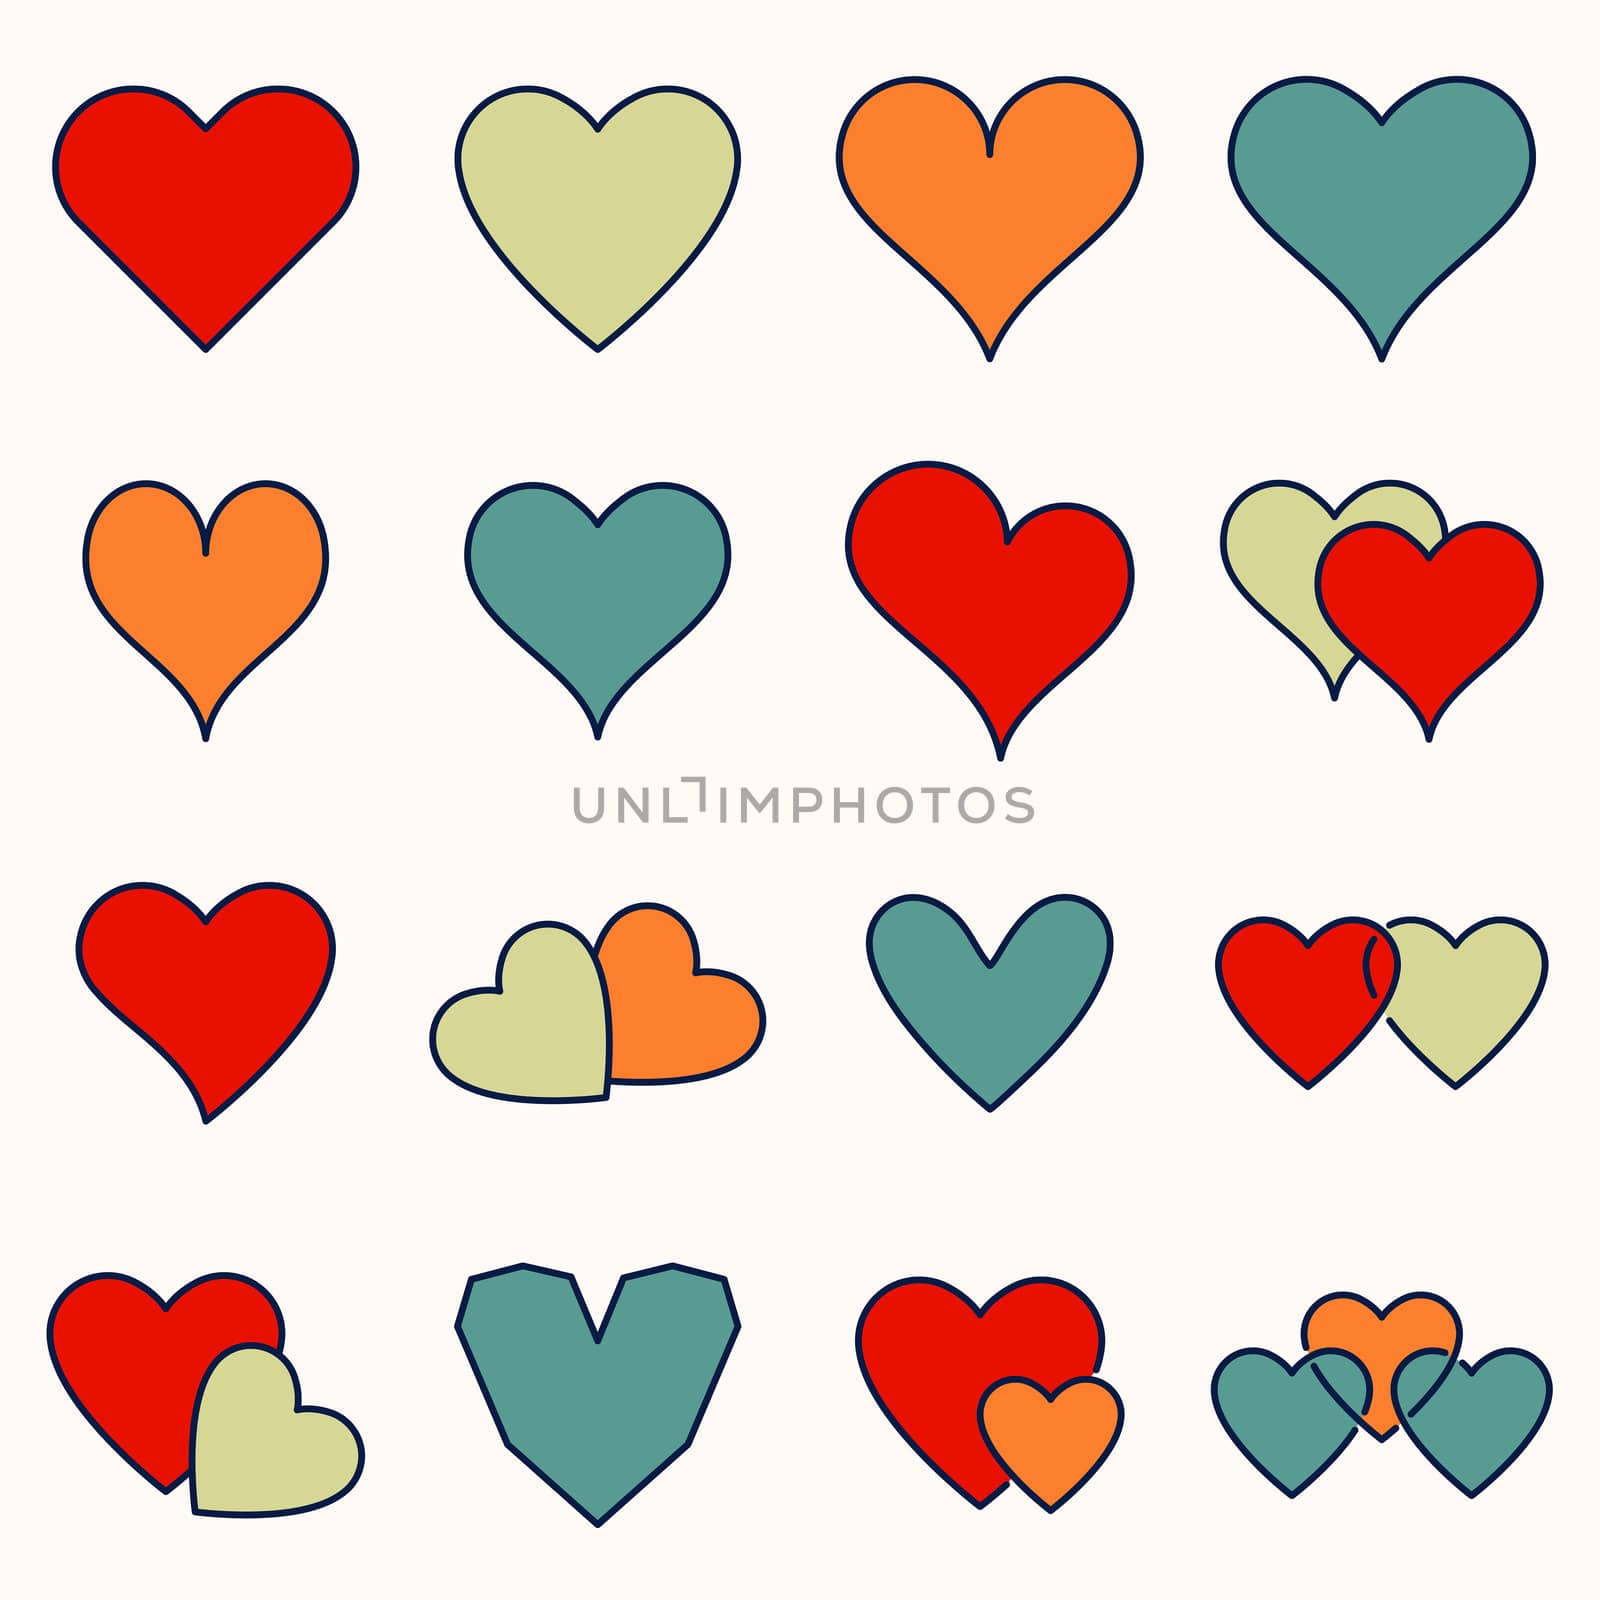 Heart shape icons against white background by Wavebreakmedia